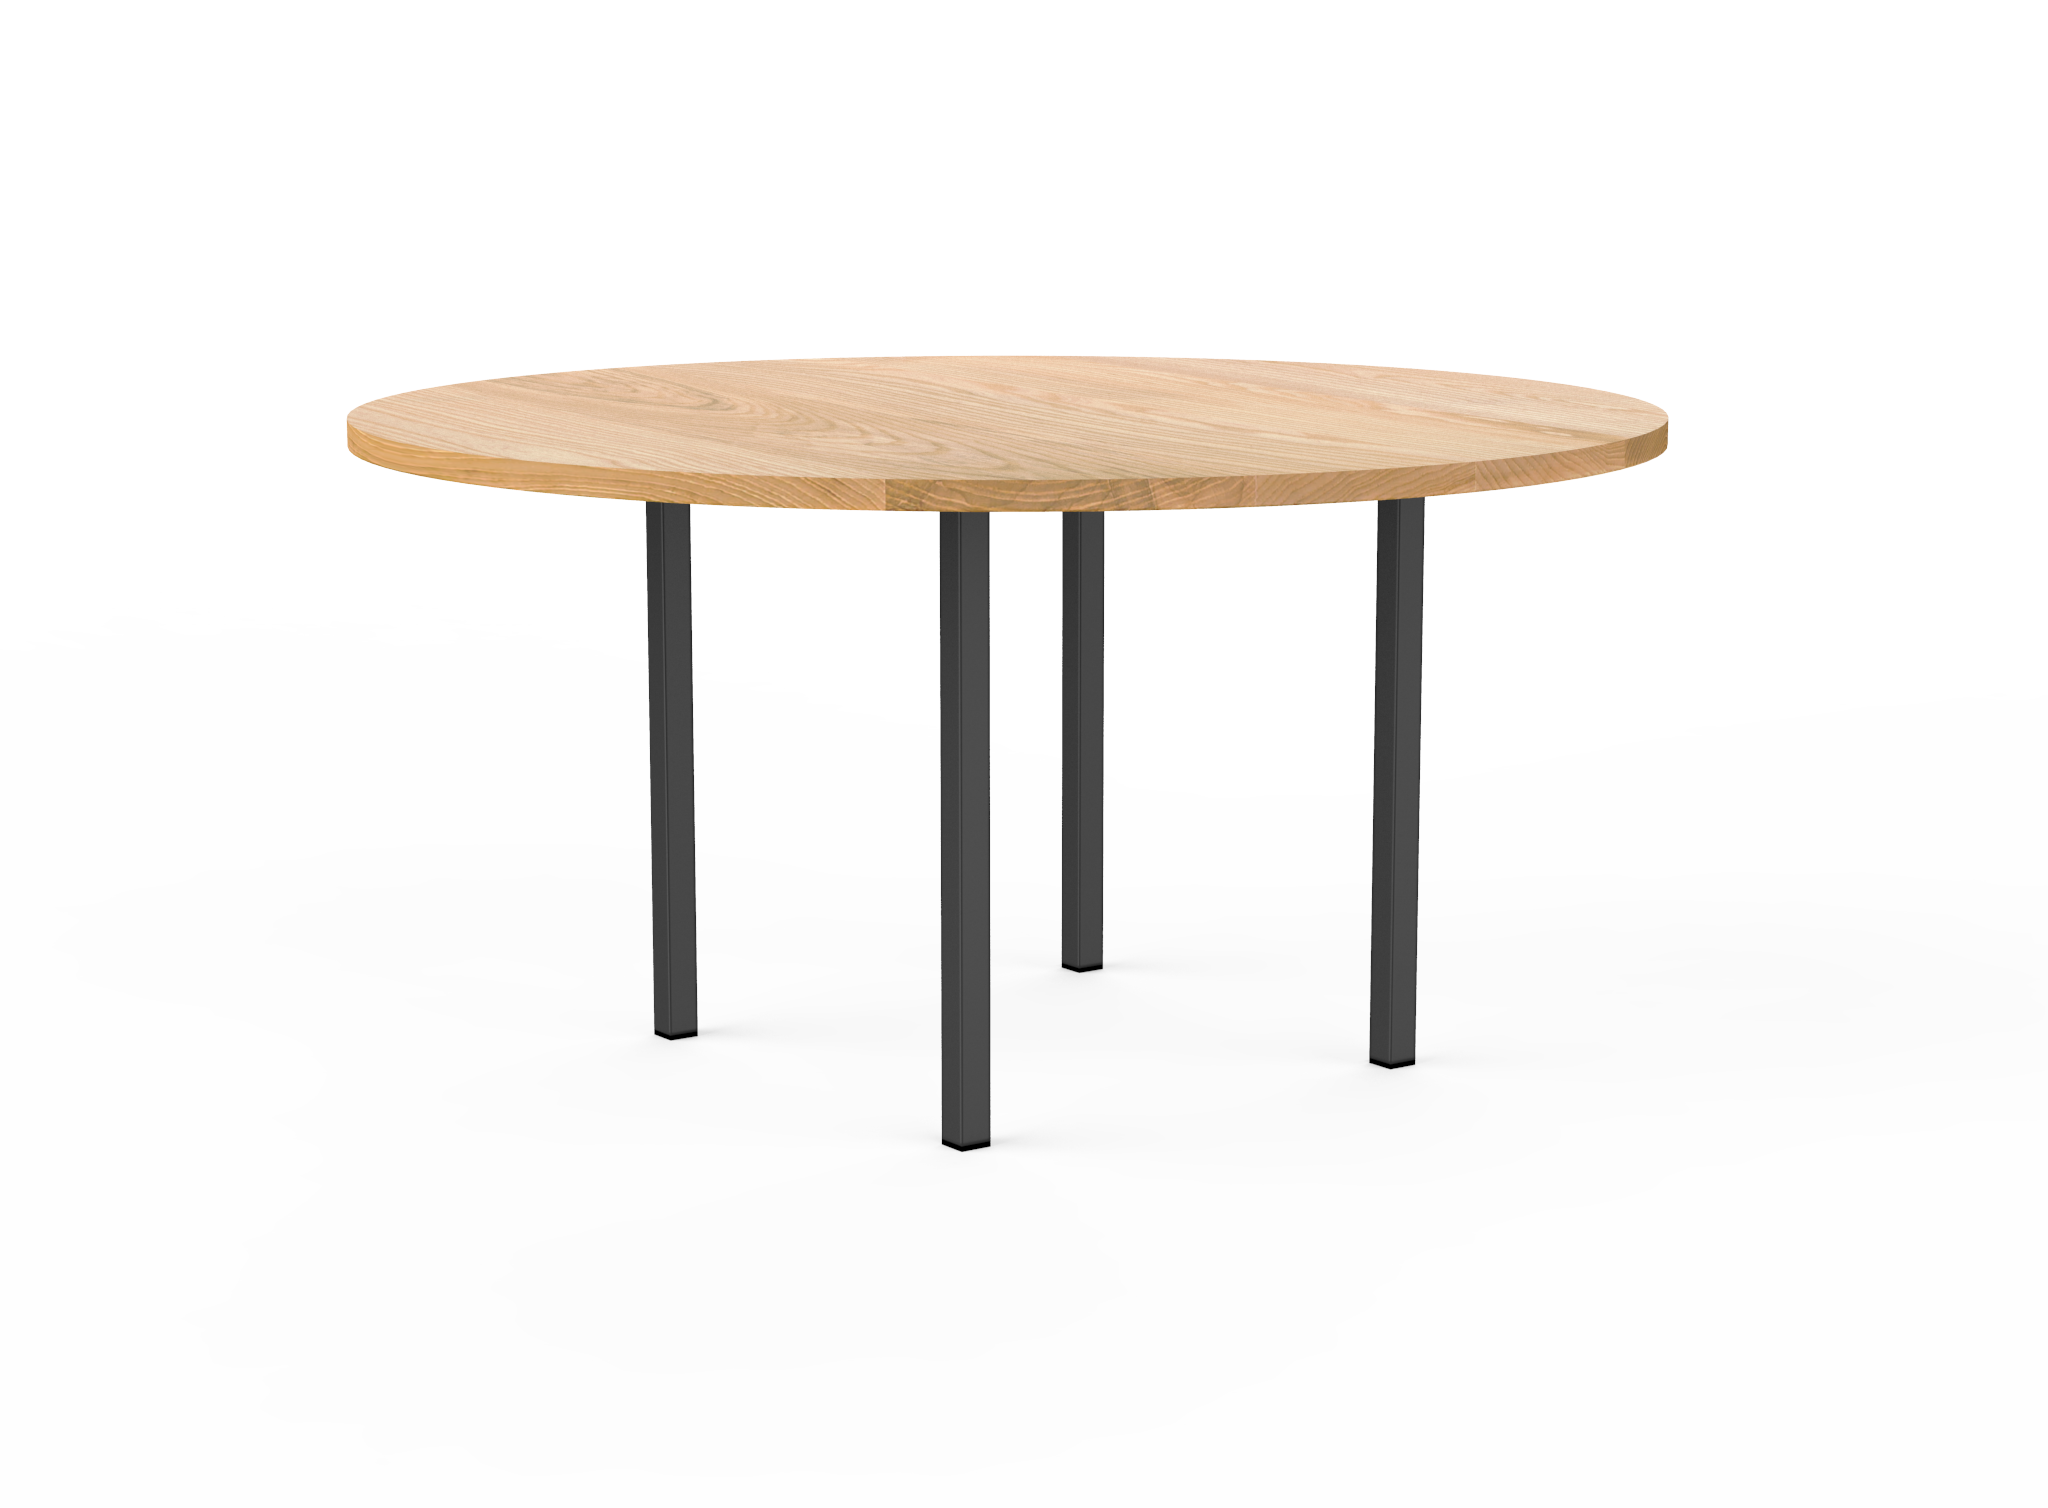 Vermont Farm Table Custom Round Wood Table S150 Ash 60 